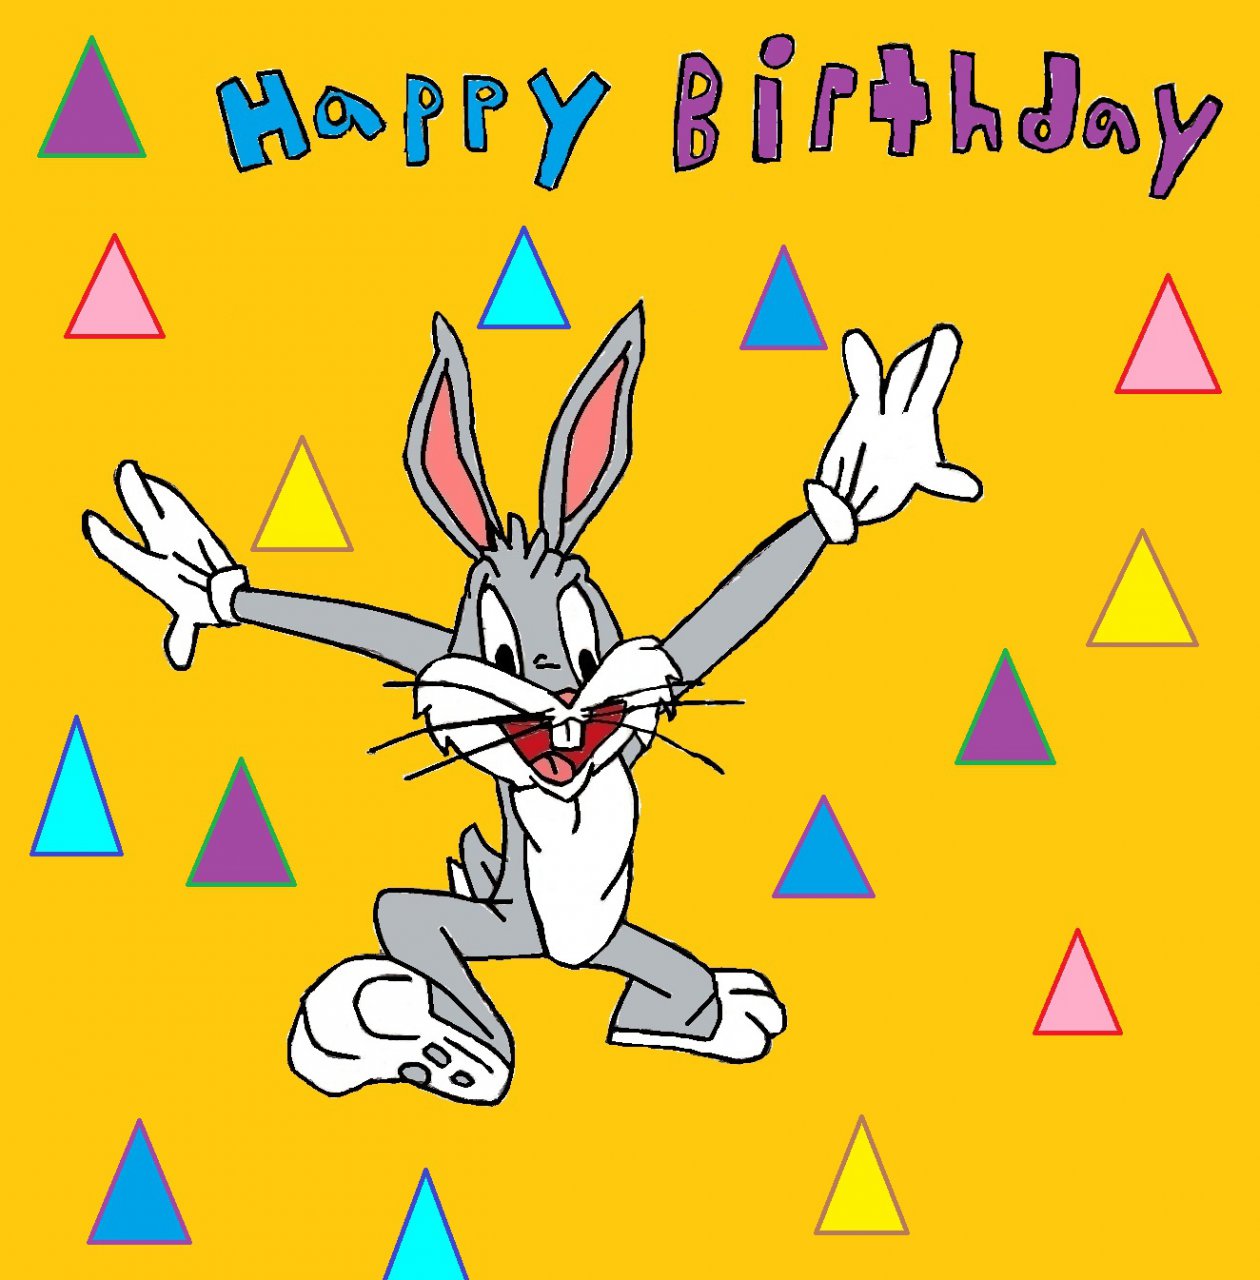 Bugs bunny birthday card by smurfgal -- Fur Affinity [dot] net